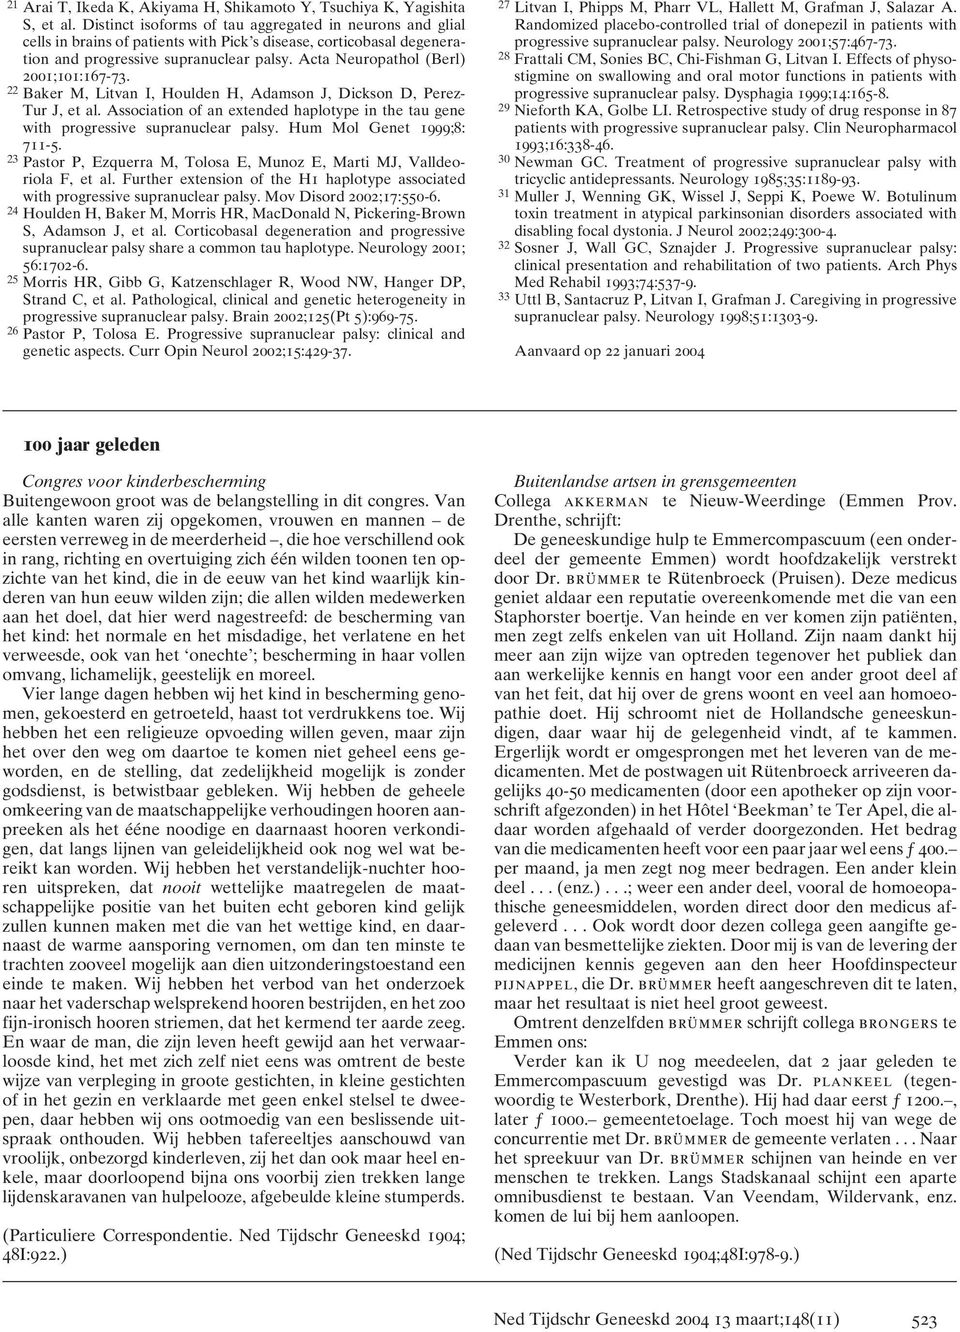 Acta Neuropathol (Berl) 2001;101:167-73. 22 Baker M, Litvan I, Houlden H, Adamson J, Dickson D, Perez- Tur J, et al.